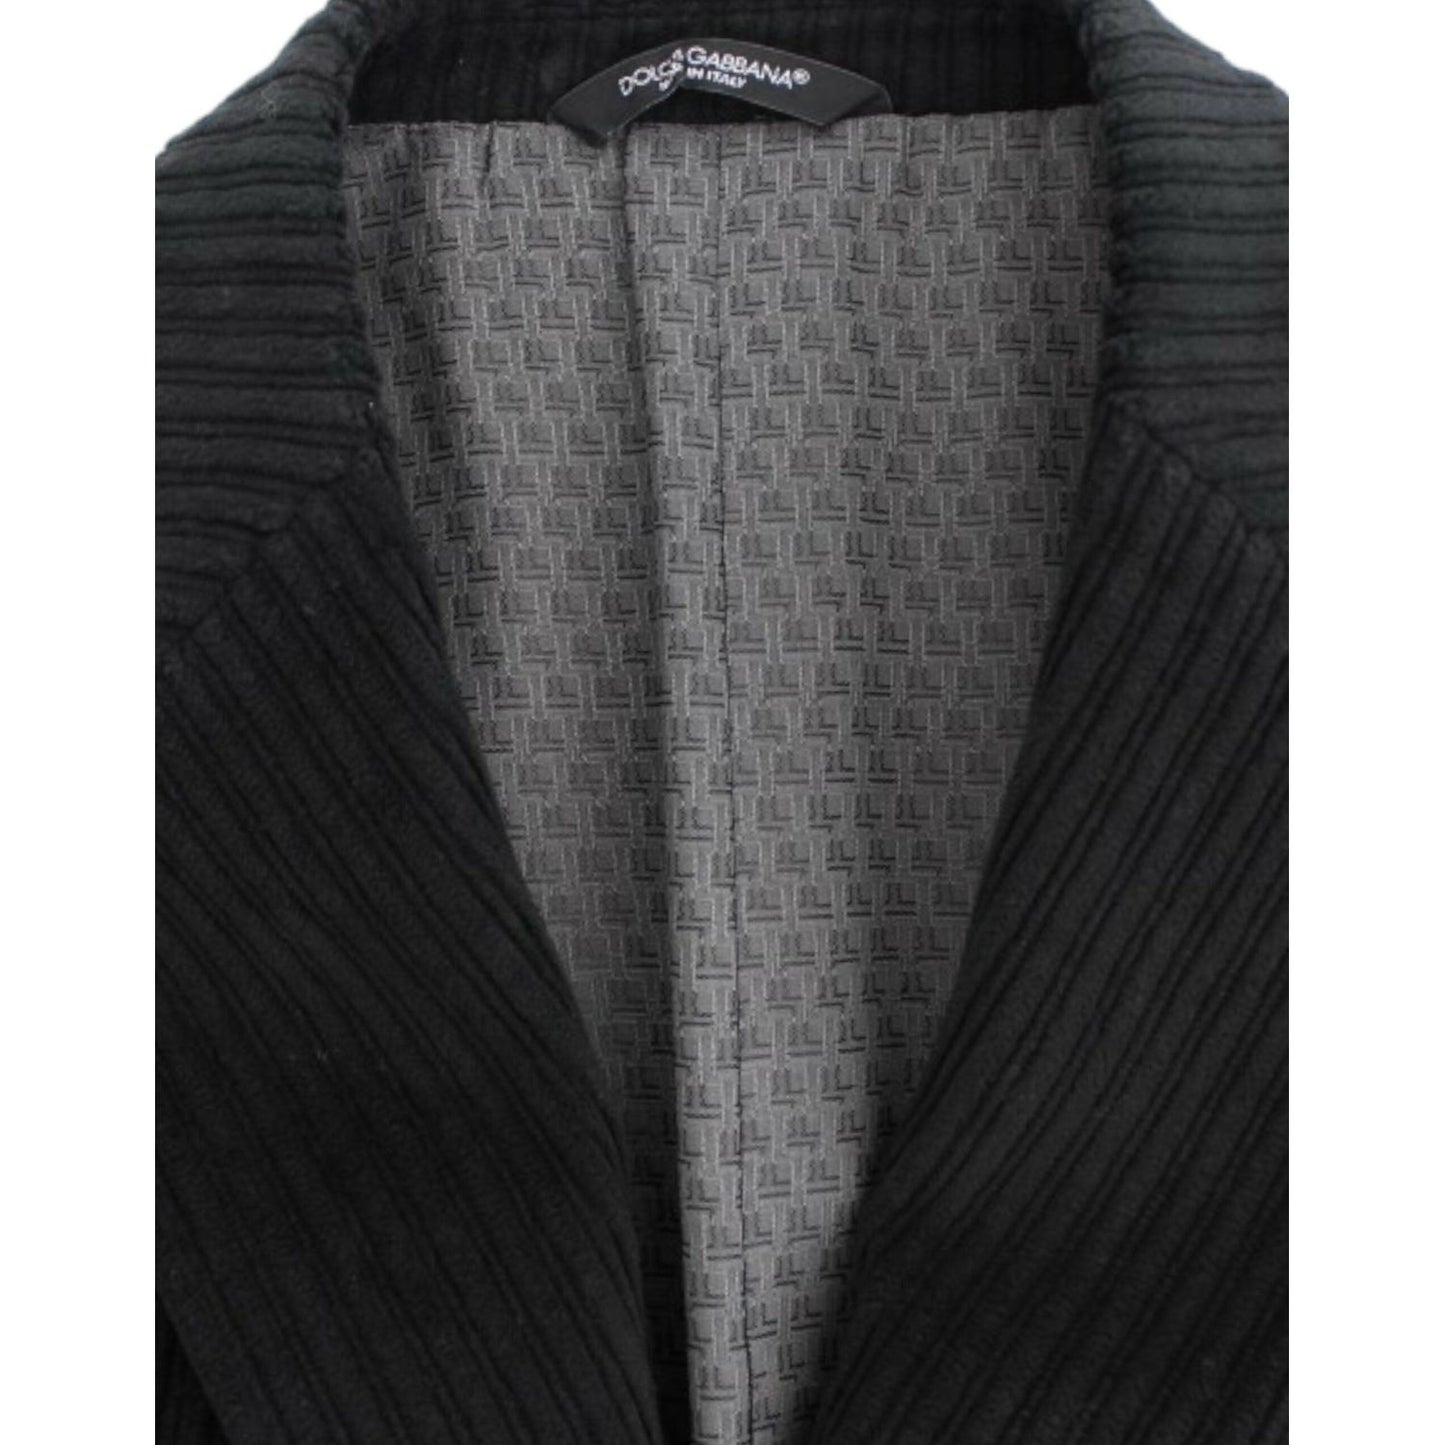 Dolce & Gabbana Elegant Black Martini Blazer Jacket black-manchester-martini-blazer